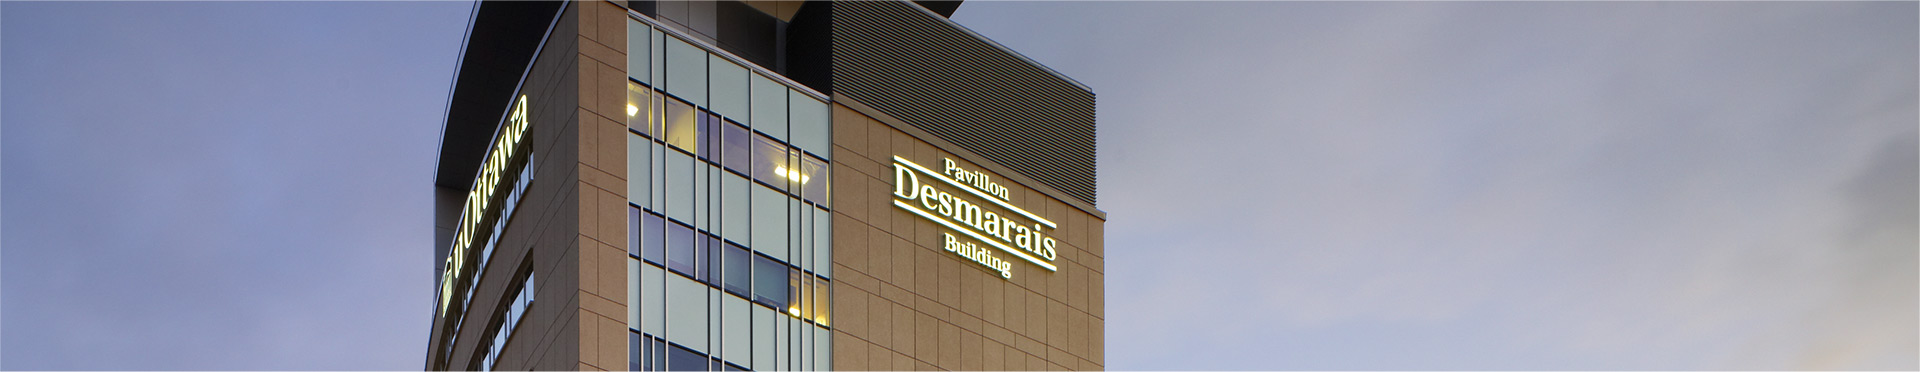 The Desmarais Building, Telfer School of Management’s main location on the University of Ottawa’s Campus